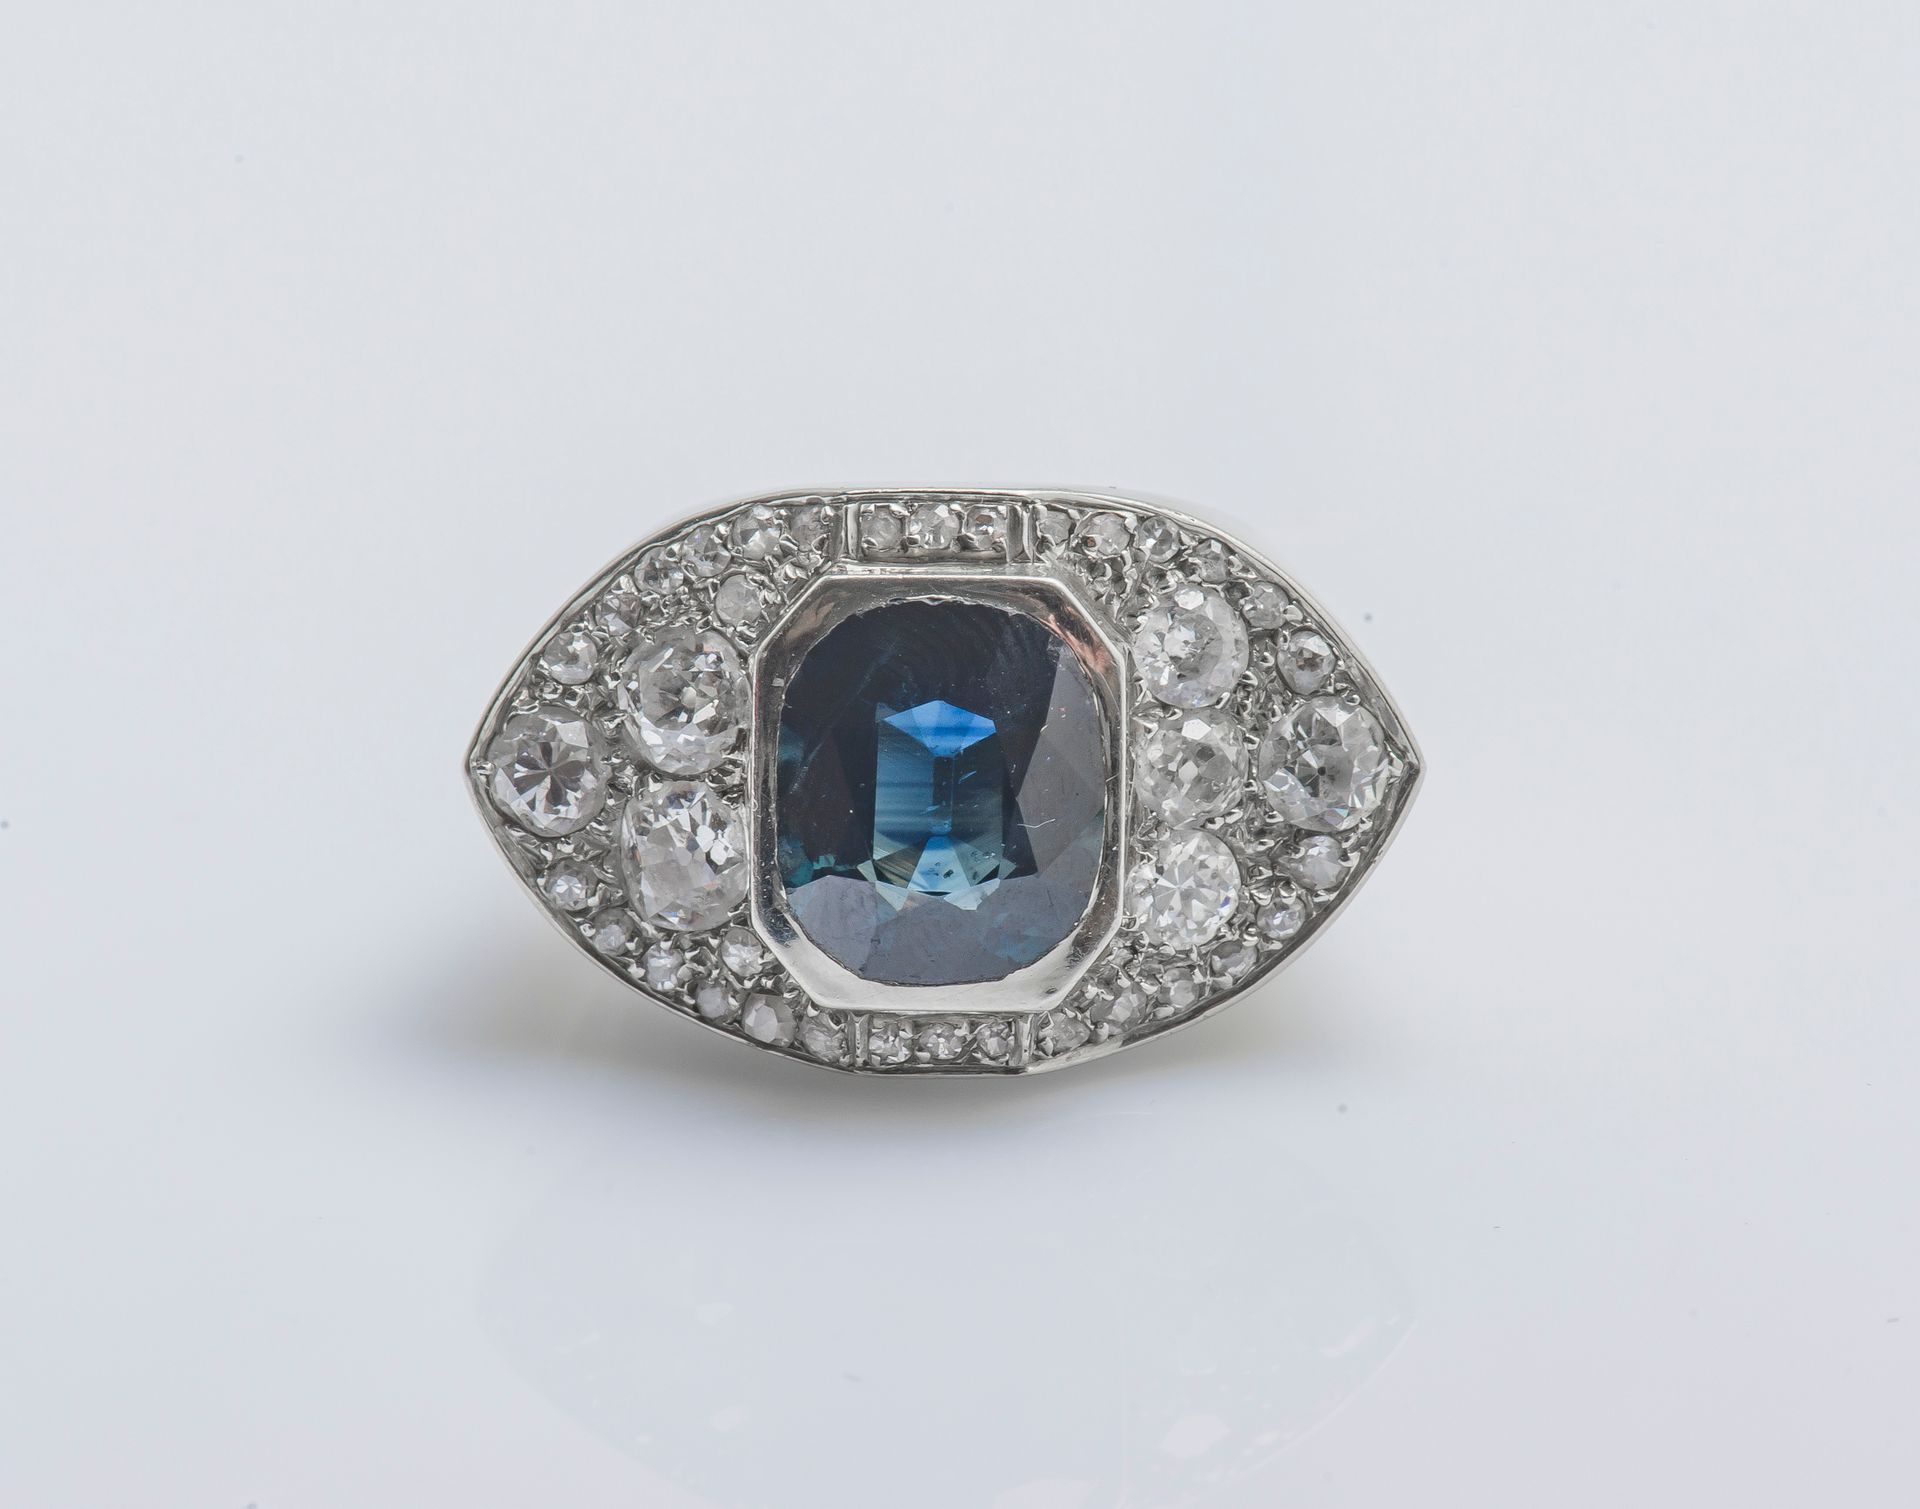 Raymond TEMPLIER 18K（750千分之一）白金坦克戒指，杏仁形的挡板上镶嵌着一颗约3.8克拉的椭圆形蓝宝石，周围是旧式切割的钻石。1940年代的&hellip;